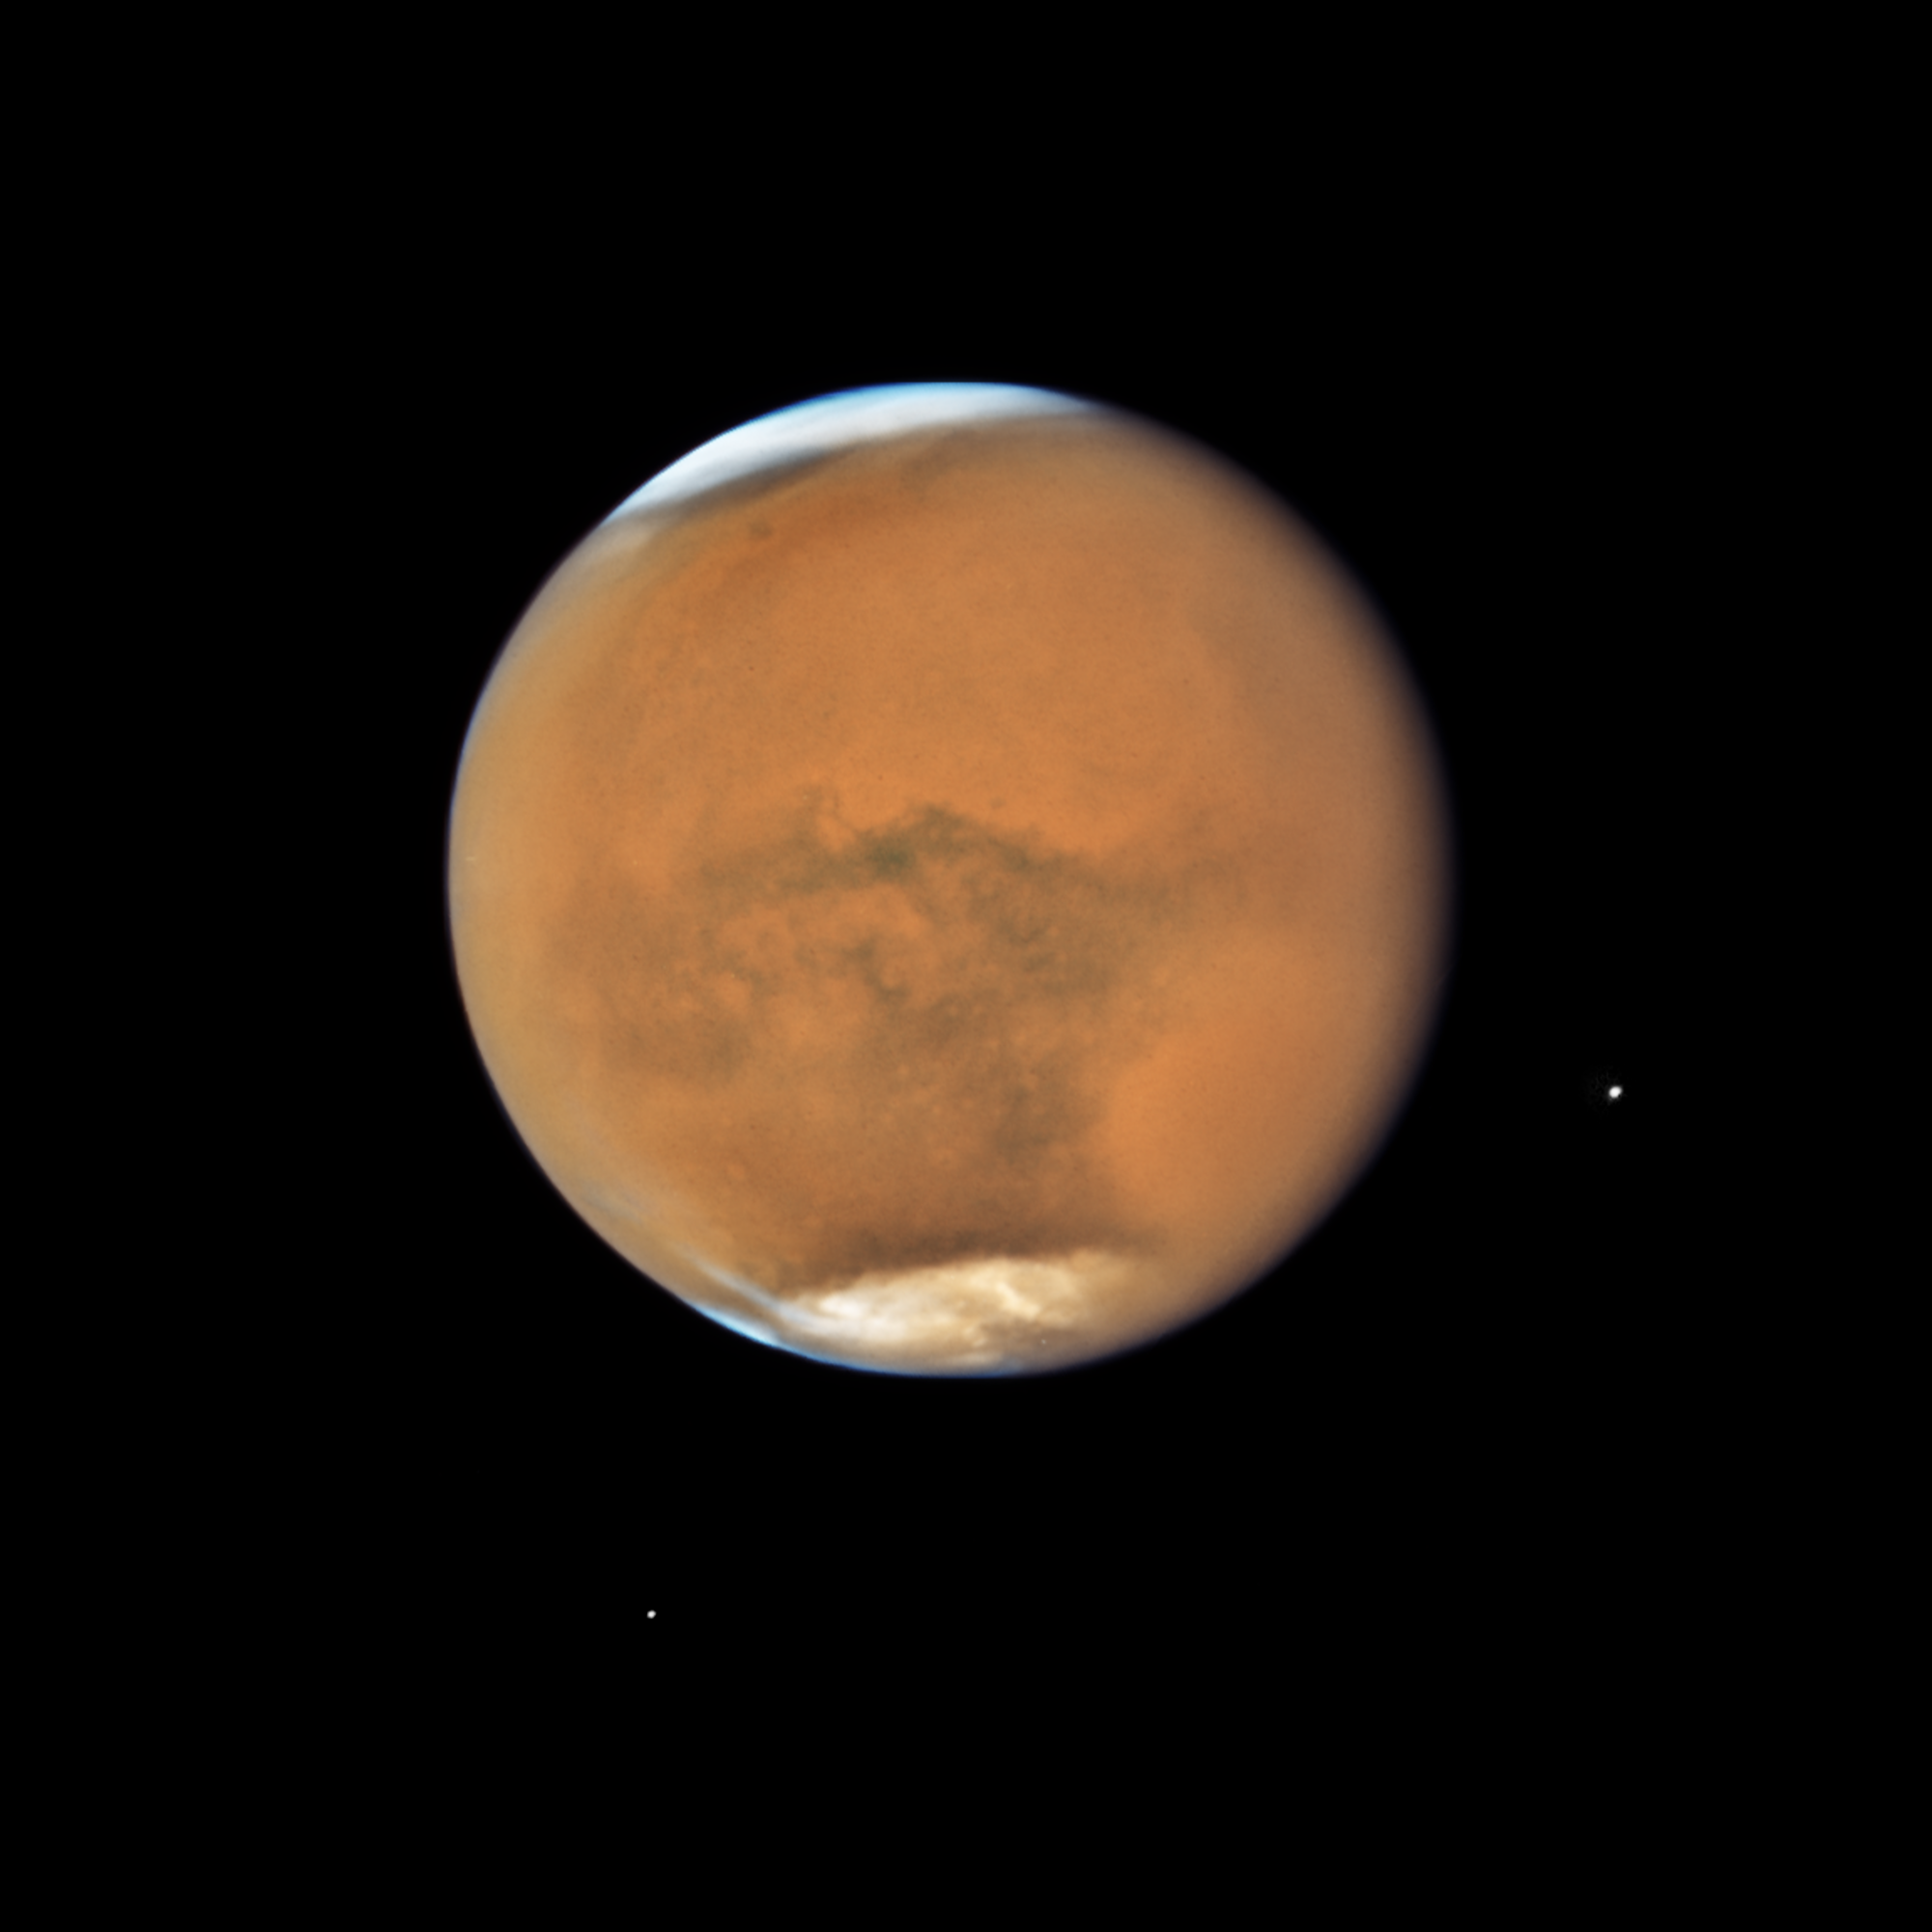 Mars, hazy with a global dust storm